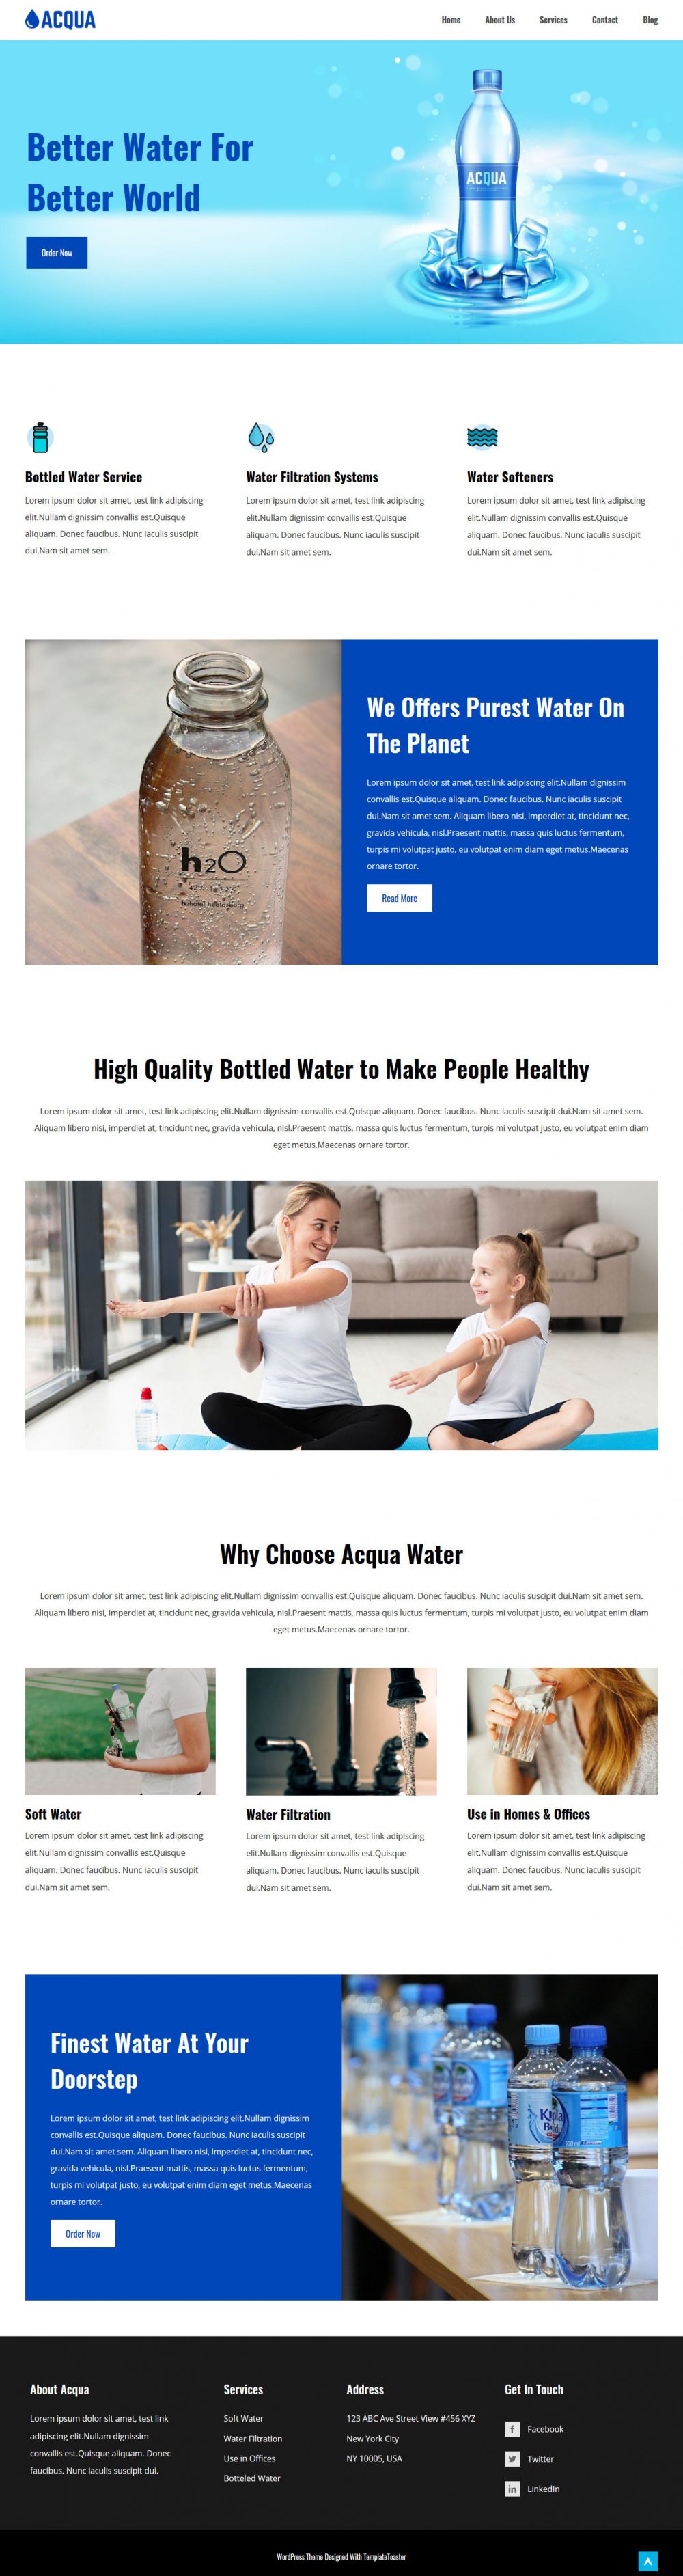 acqua water purifier drupal theme